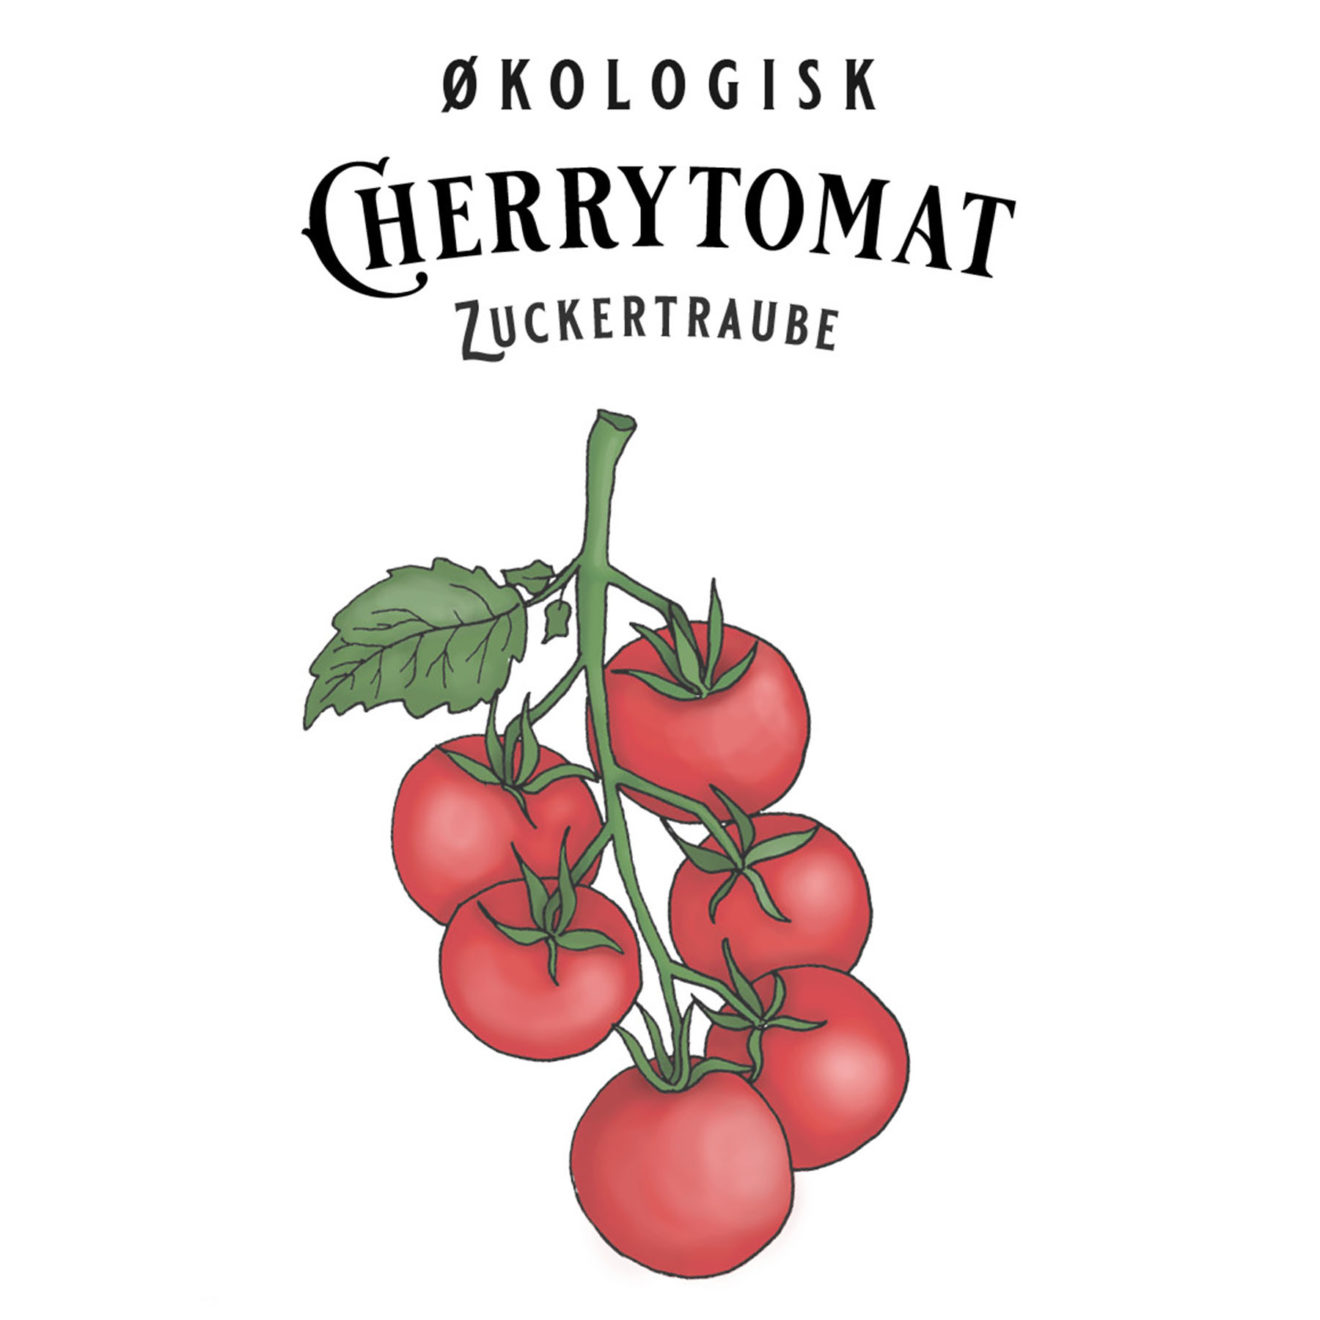 Cherrytomat - Zuckertraube